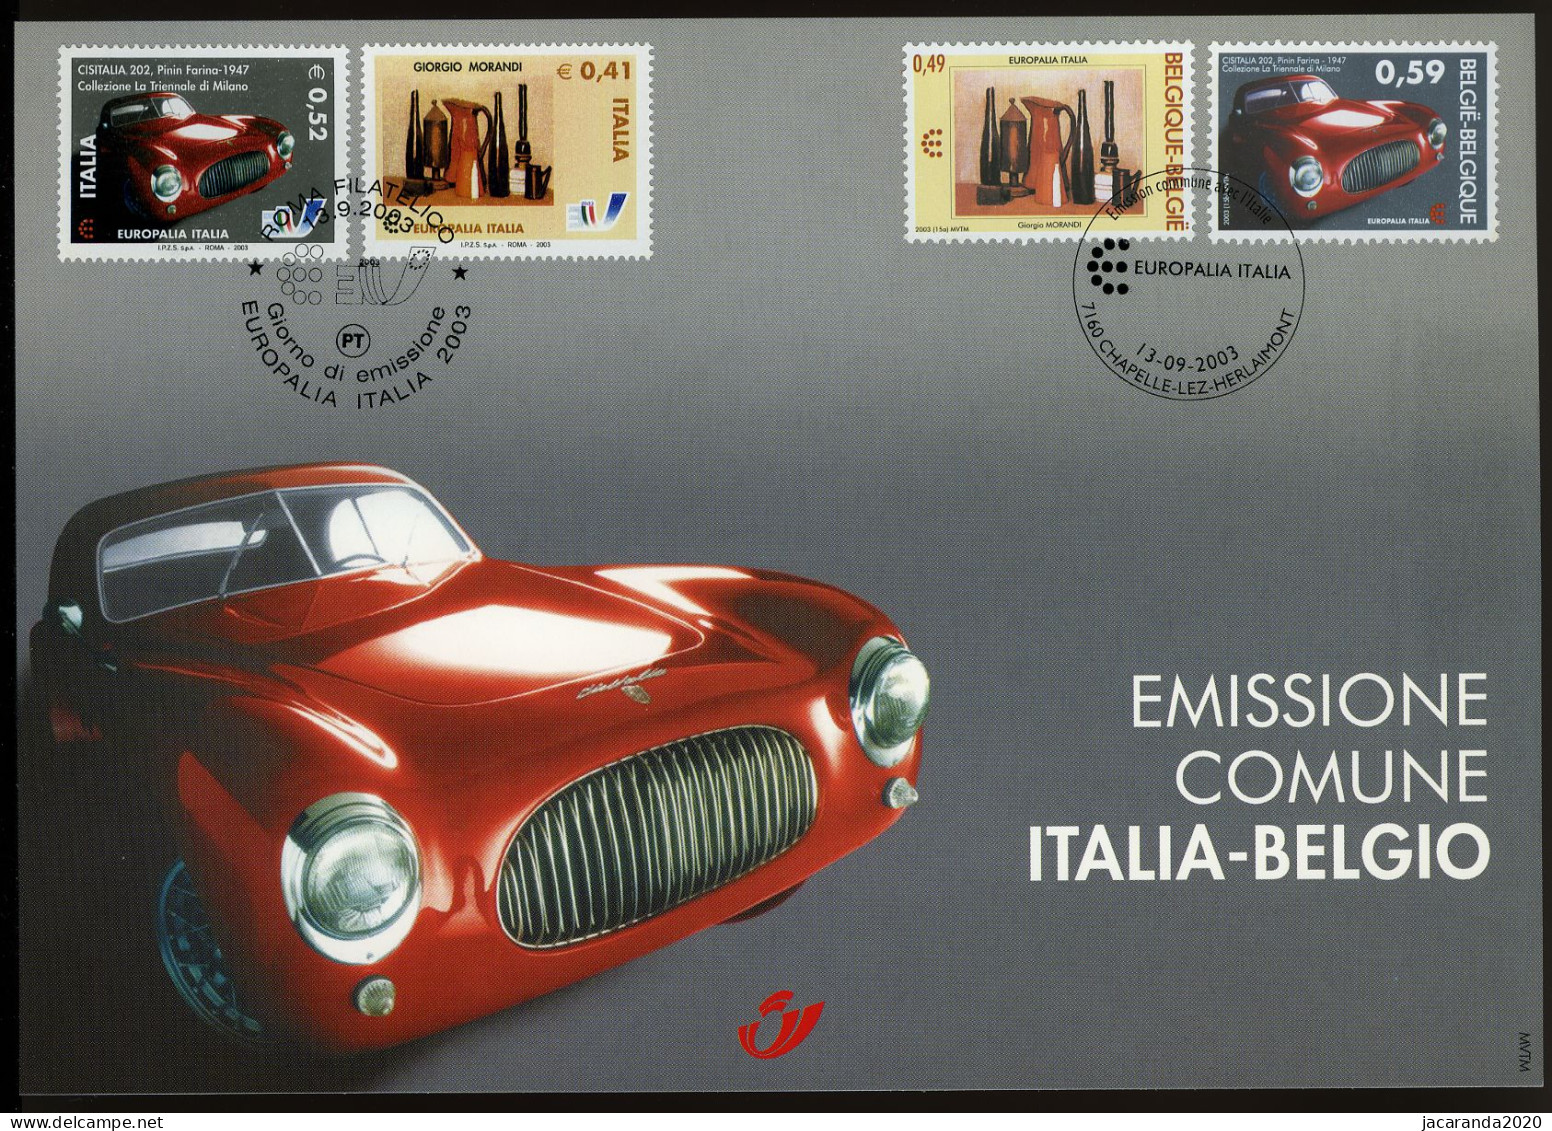 België 3205 HK - Europalia Italië - Giorgio Morandi - Pinin Farina - Gem. Uitgifte Met Italië - 2003 - Souvenir Cards - Joint Issues [HK]